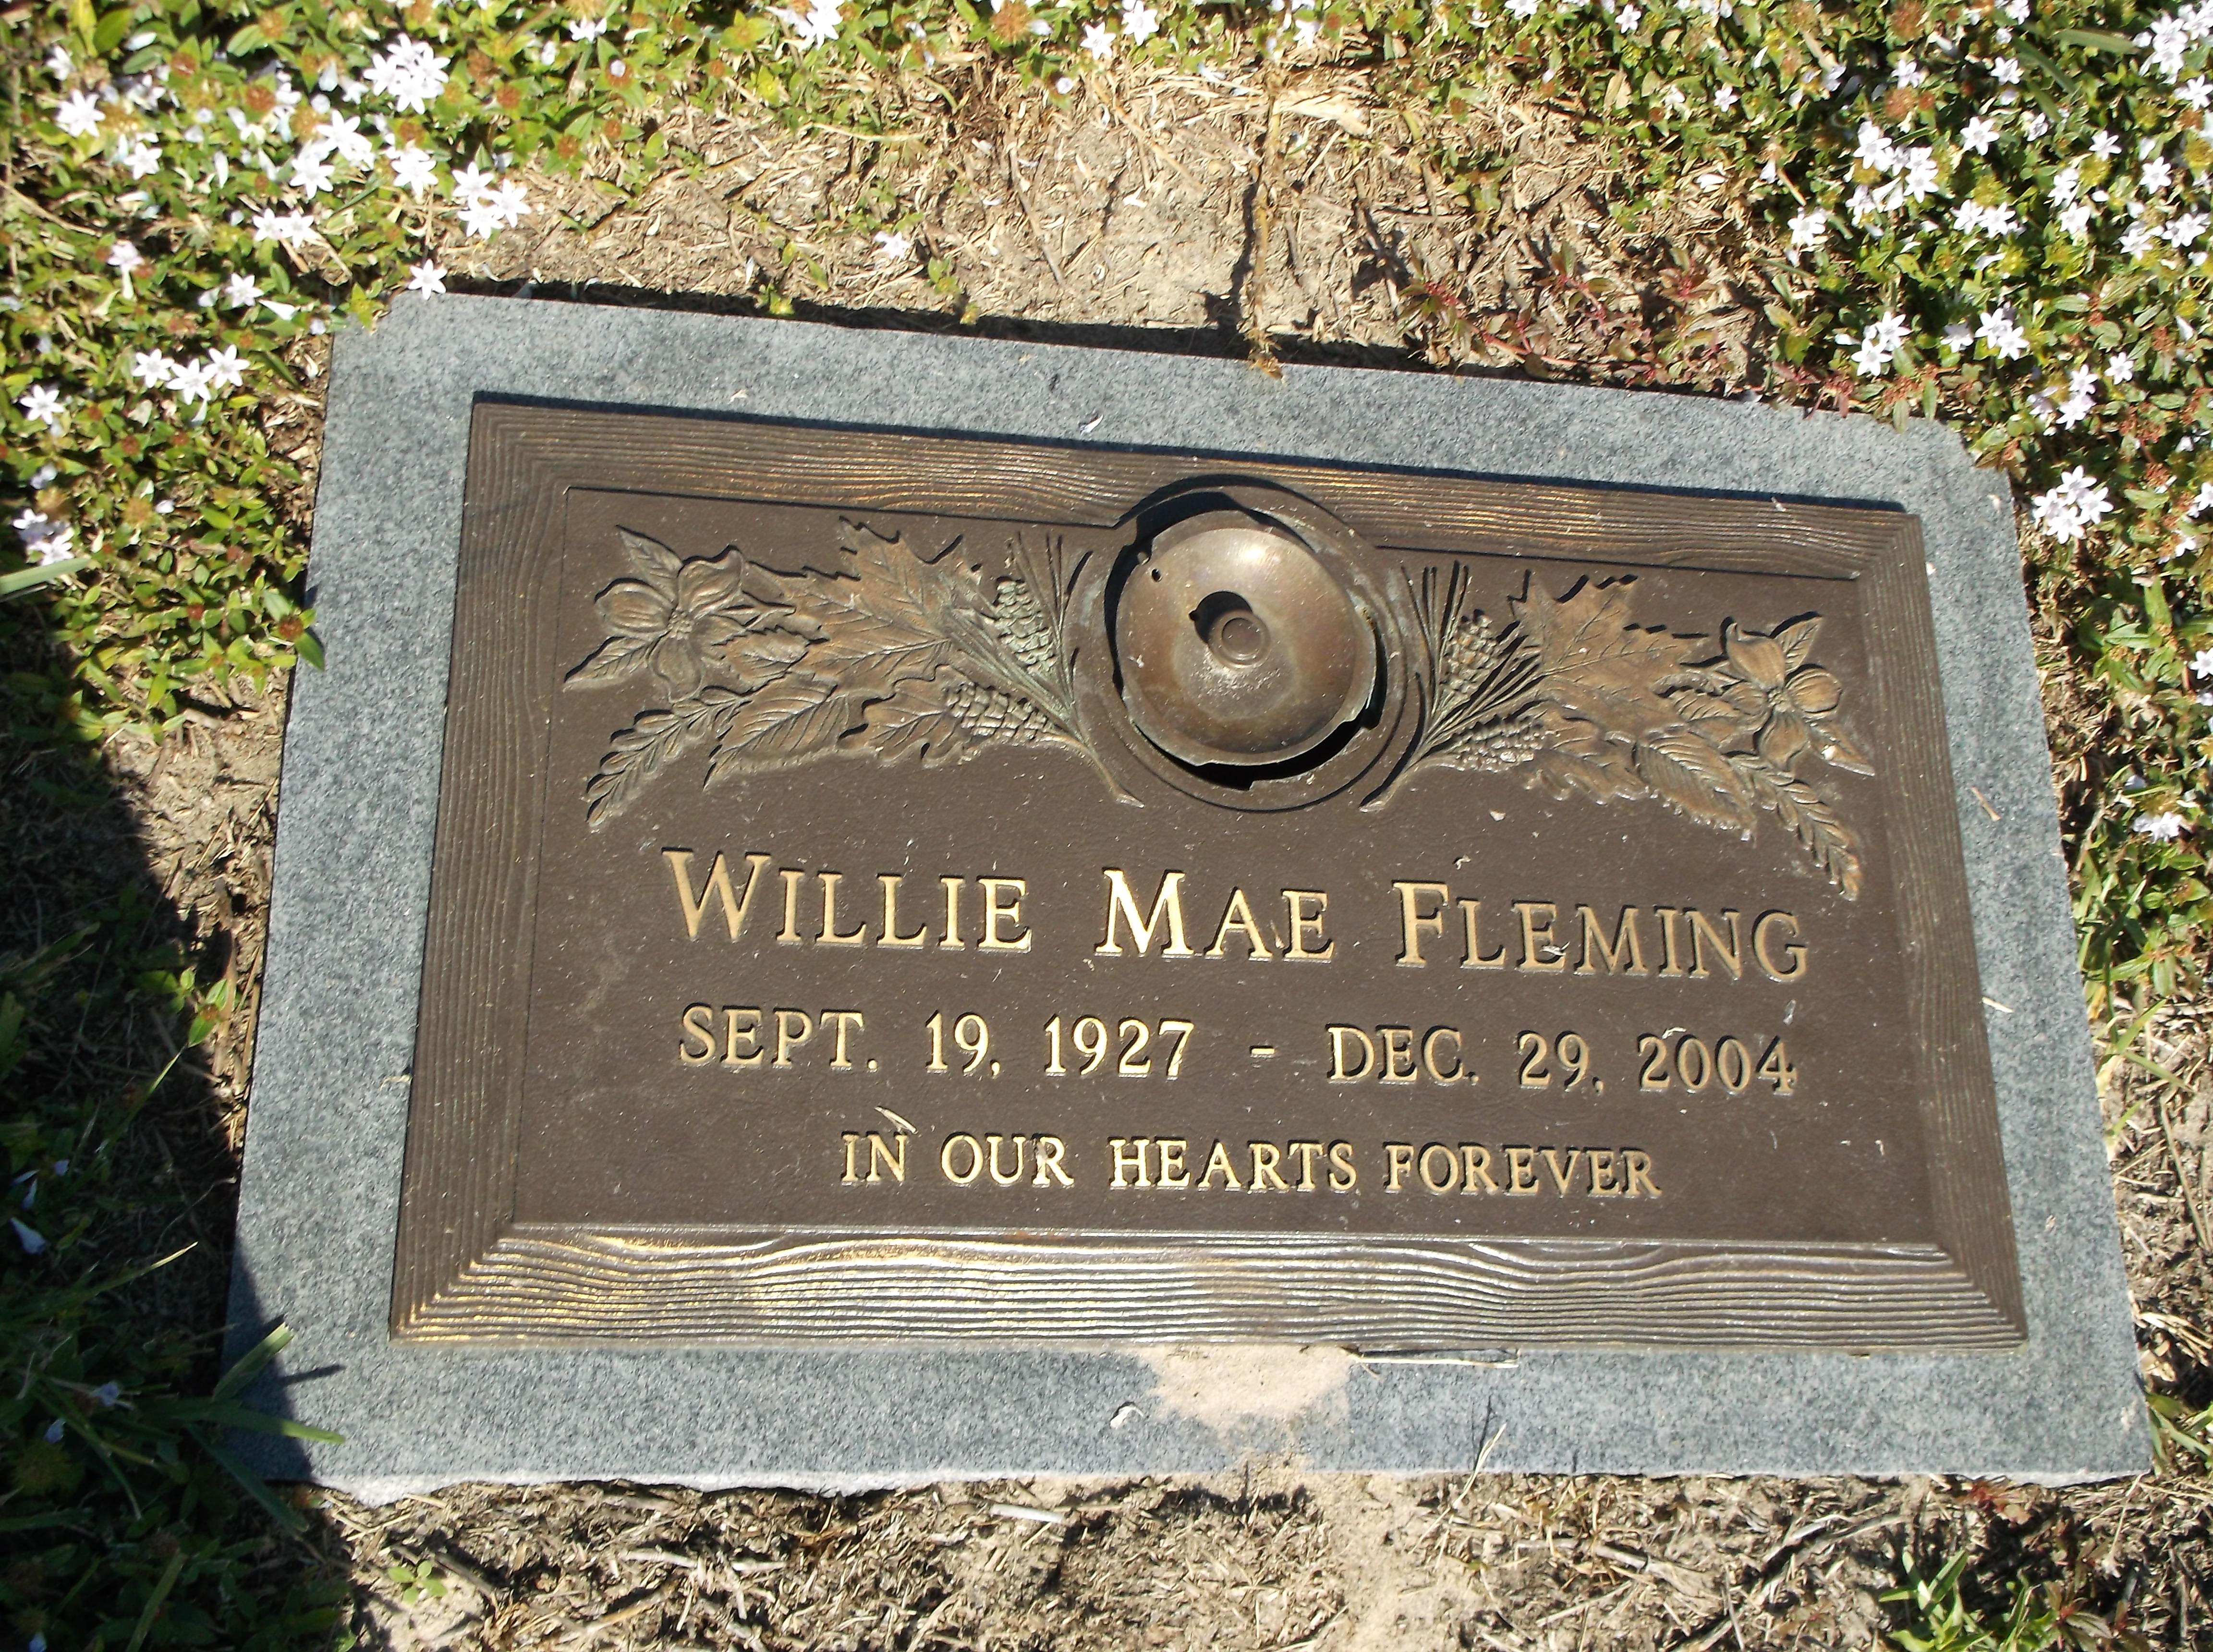 Willie Mae Fleming